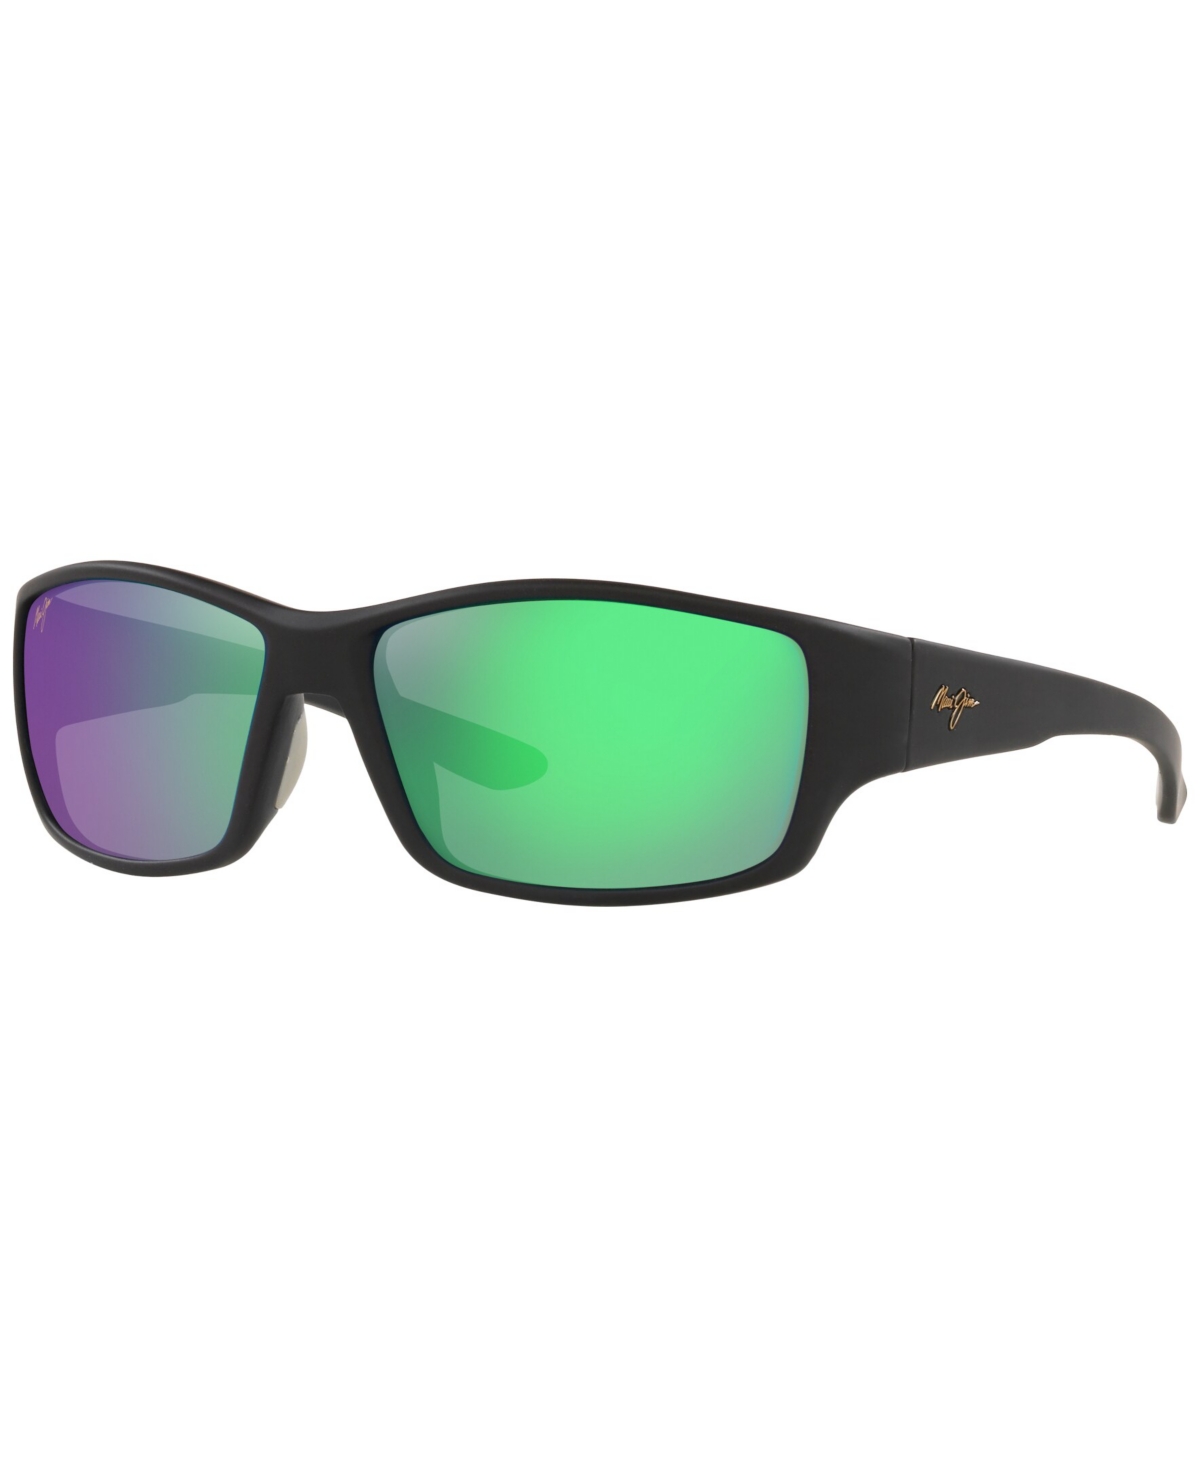 Men's Polarized Sunglasses, MJ000673 Local Kine 61 - Black Green